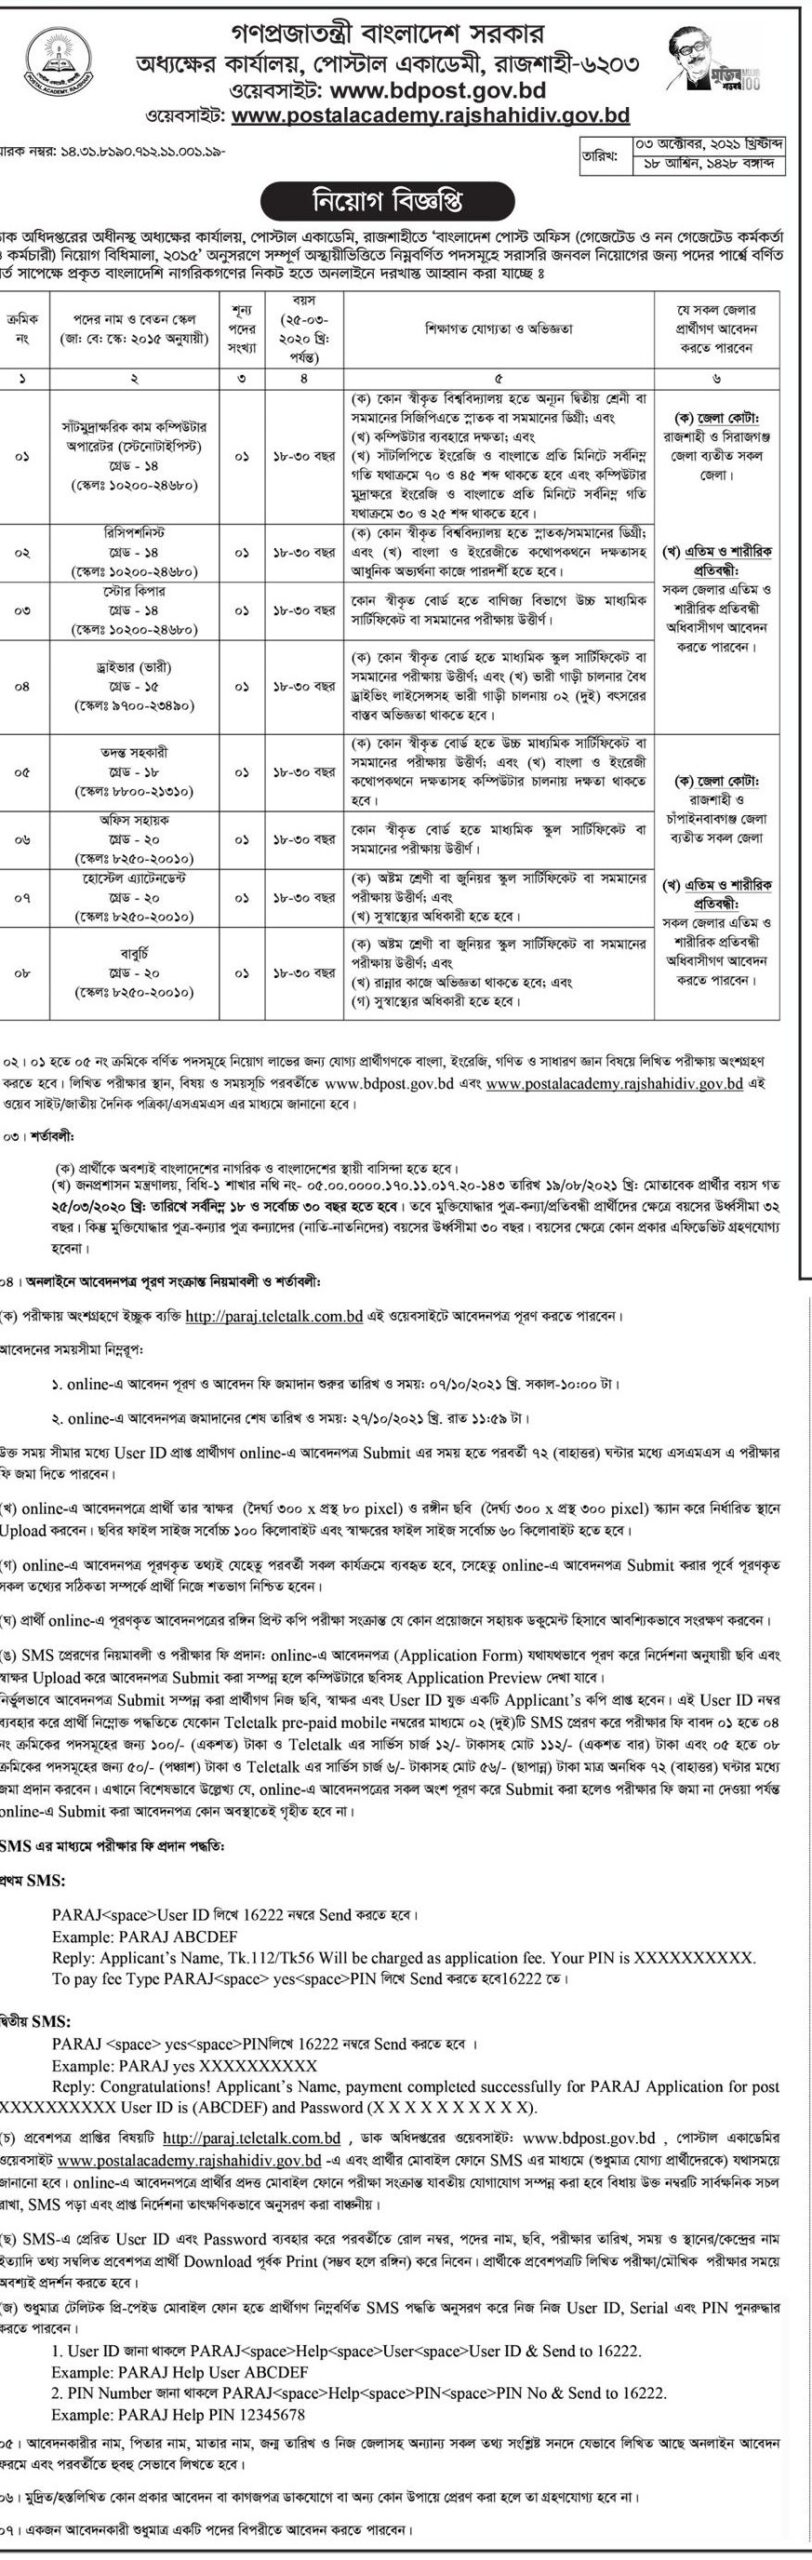 bdpost, postal Academy, Rajshahi Job Circular 2021  